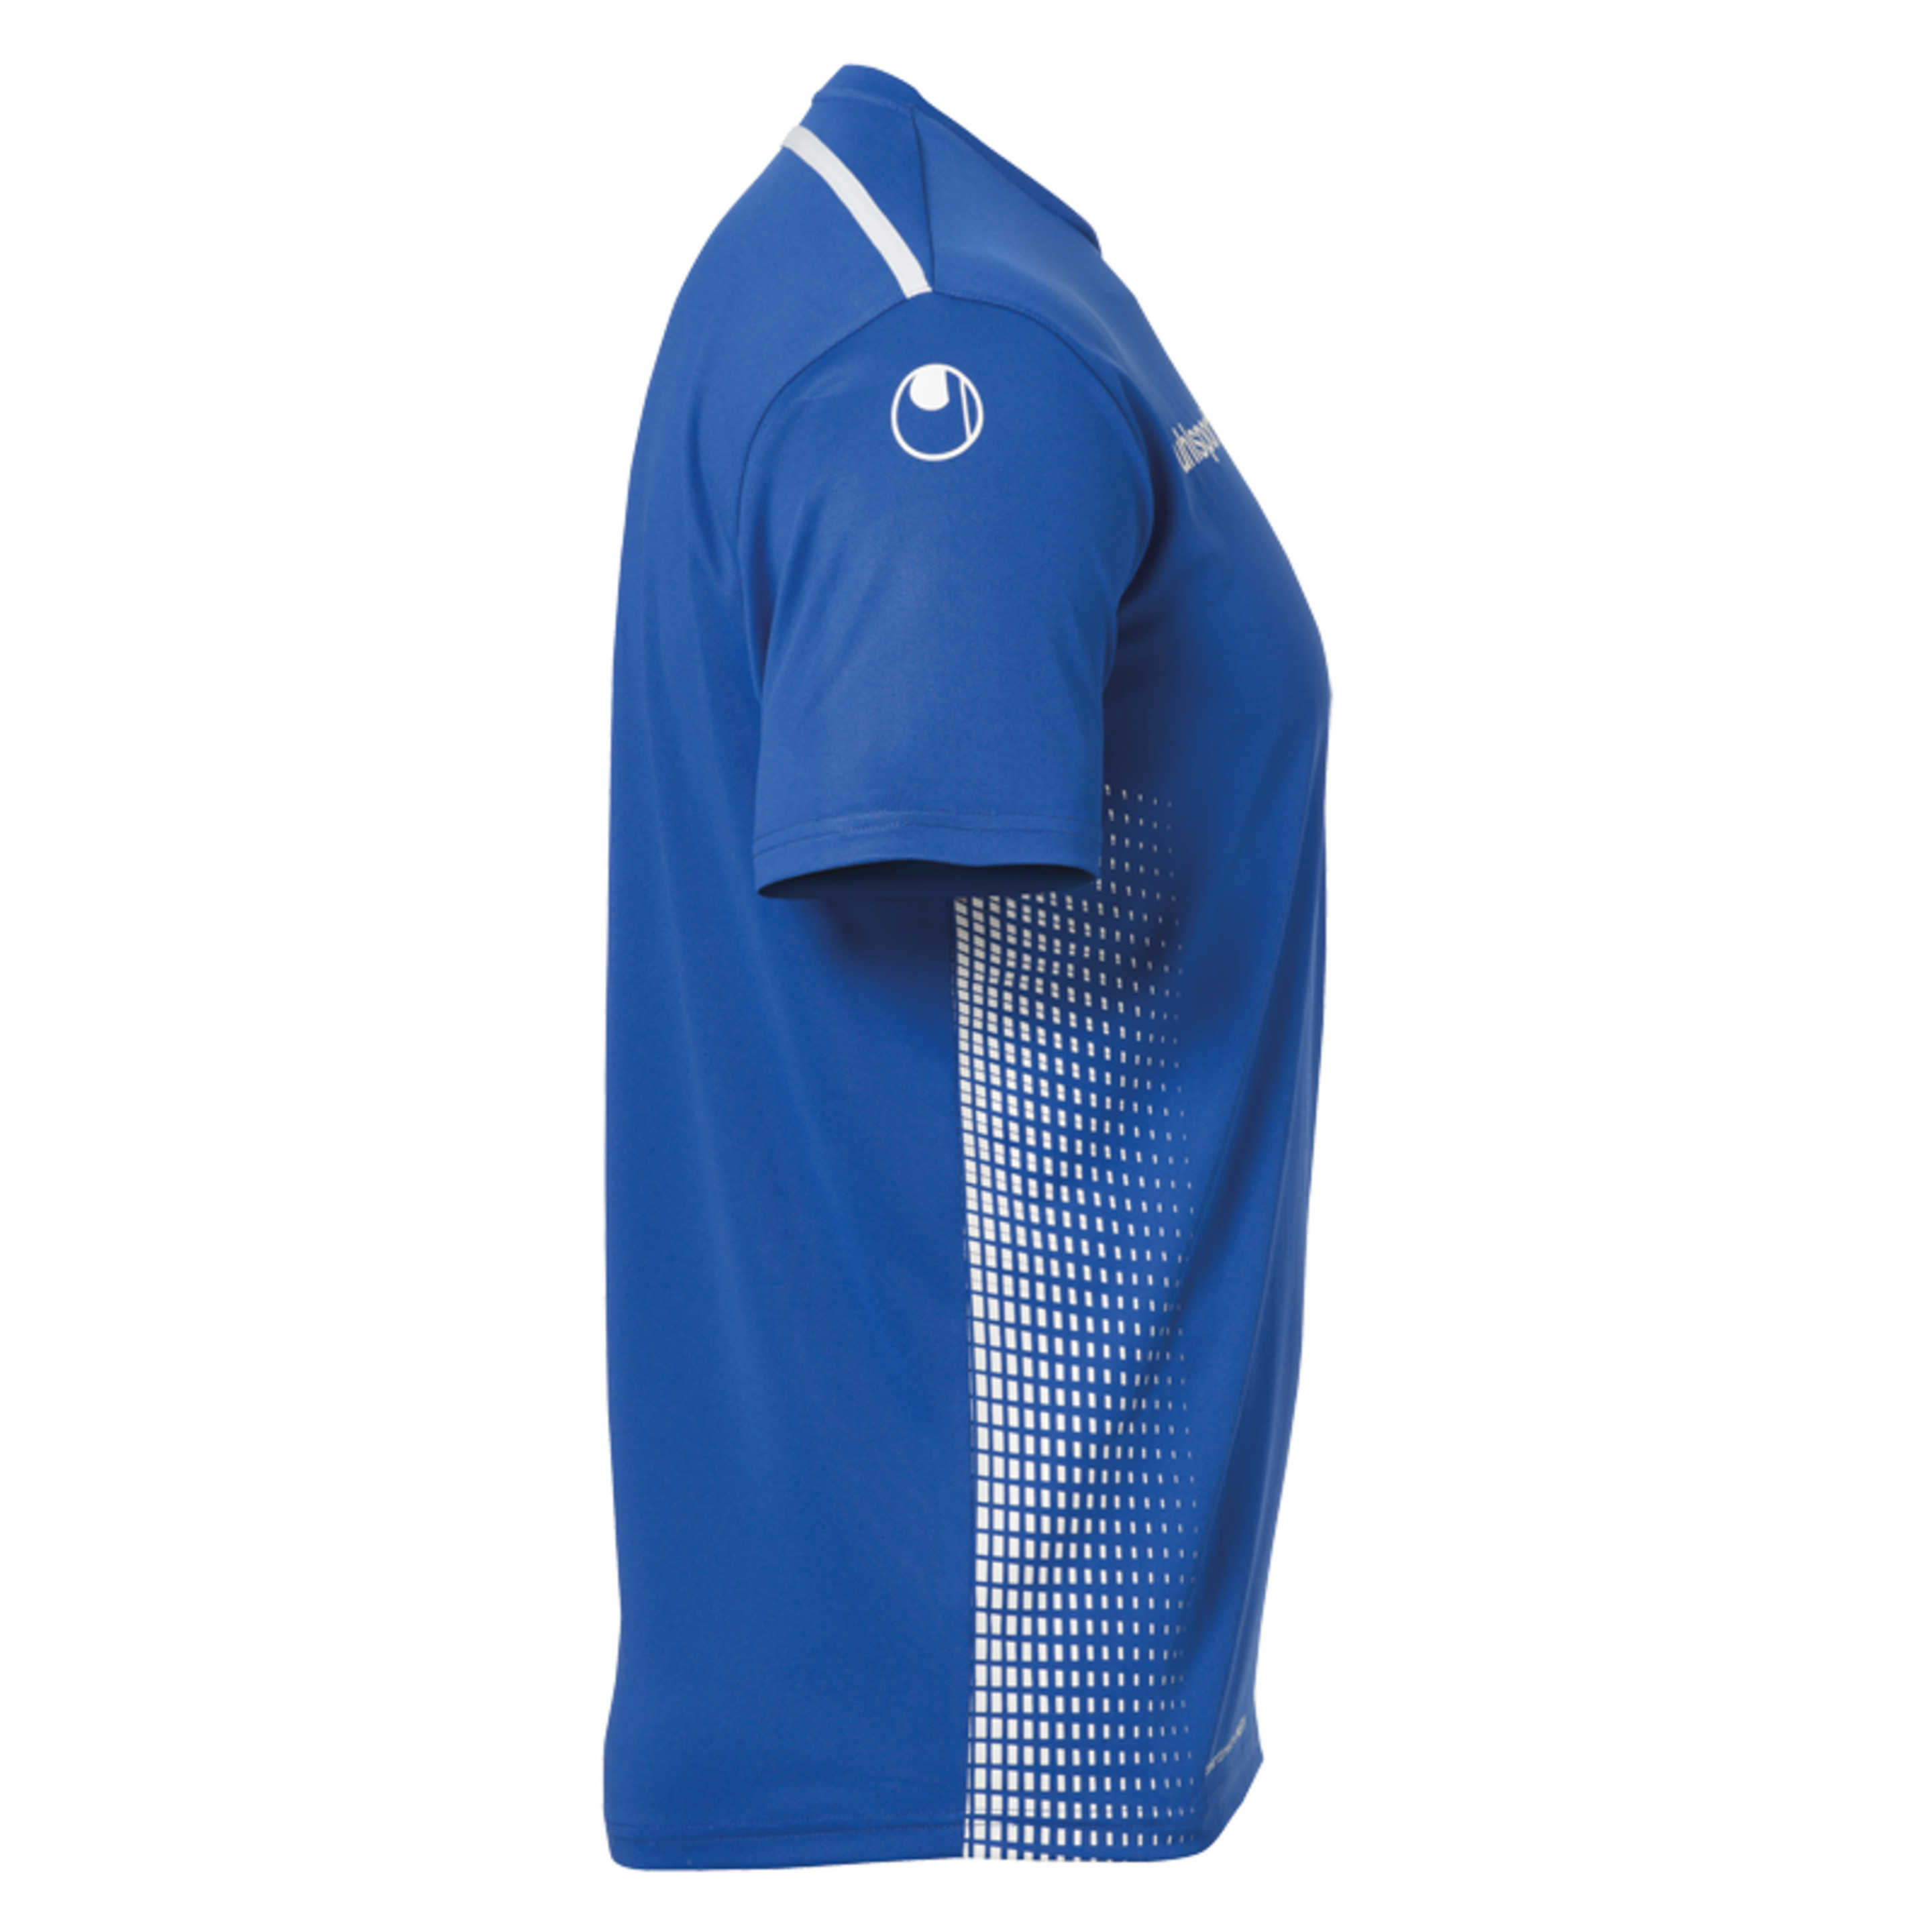 Camiseta Y Pantalón Uhlsport Score Kit Ss - Azul - Score Kit Ss Azur/blanco Uhlsport  MKP